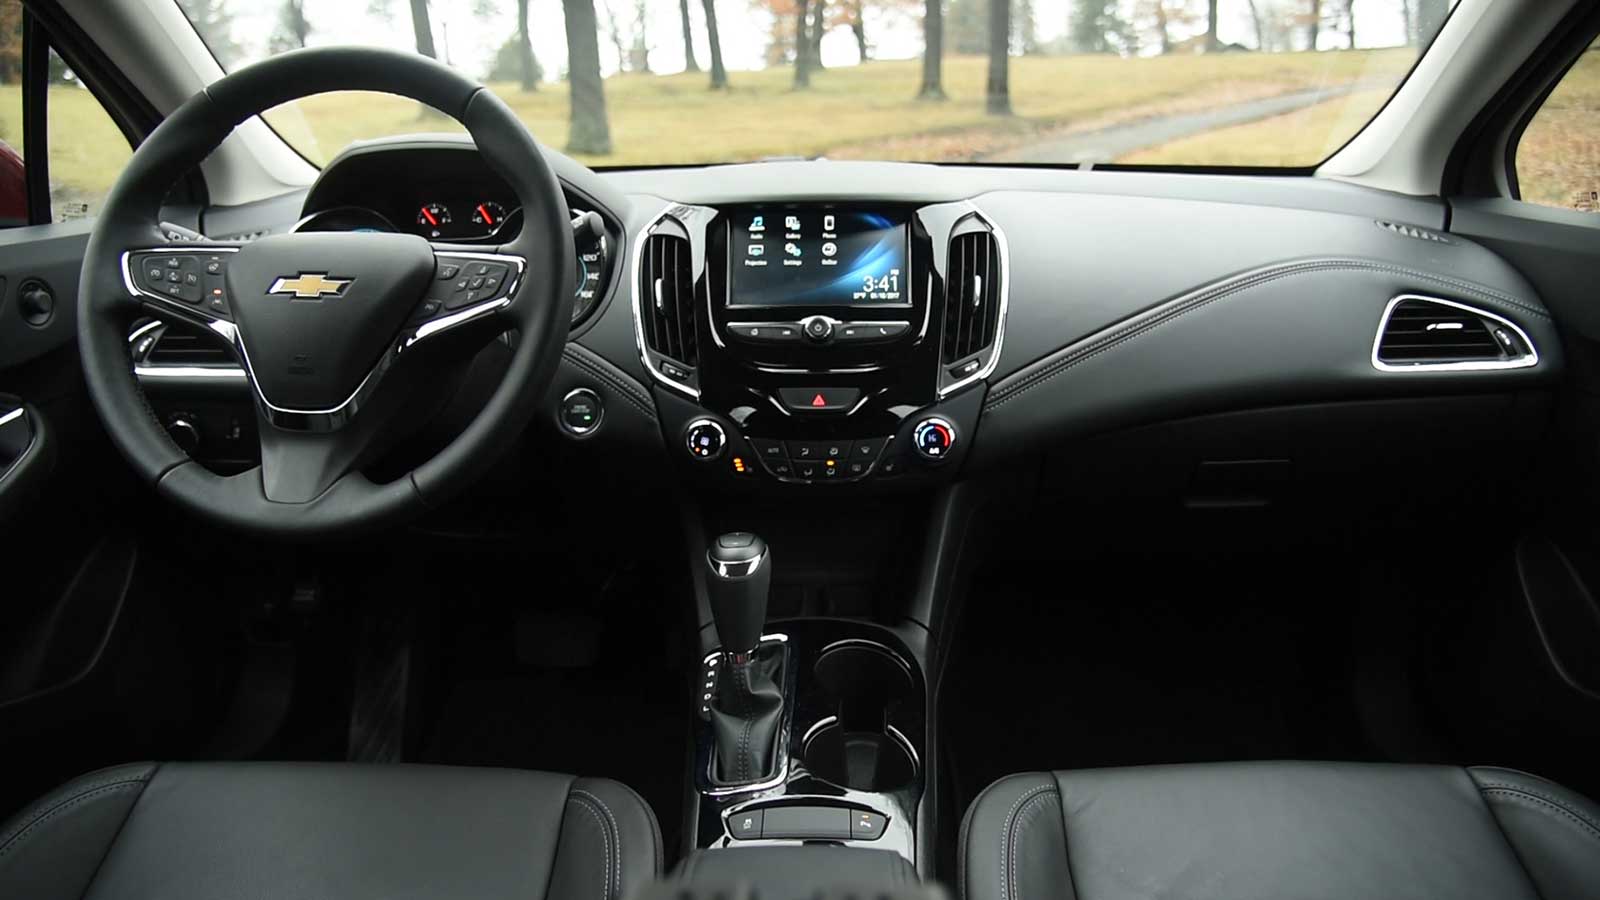 2017 Chevrolet Cruze Hatchback Interior 09